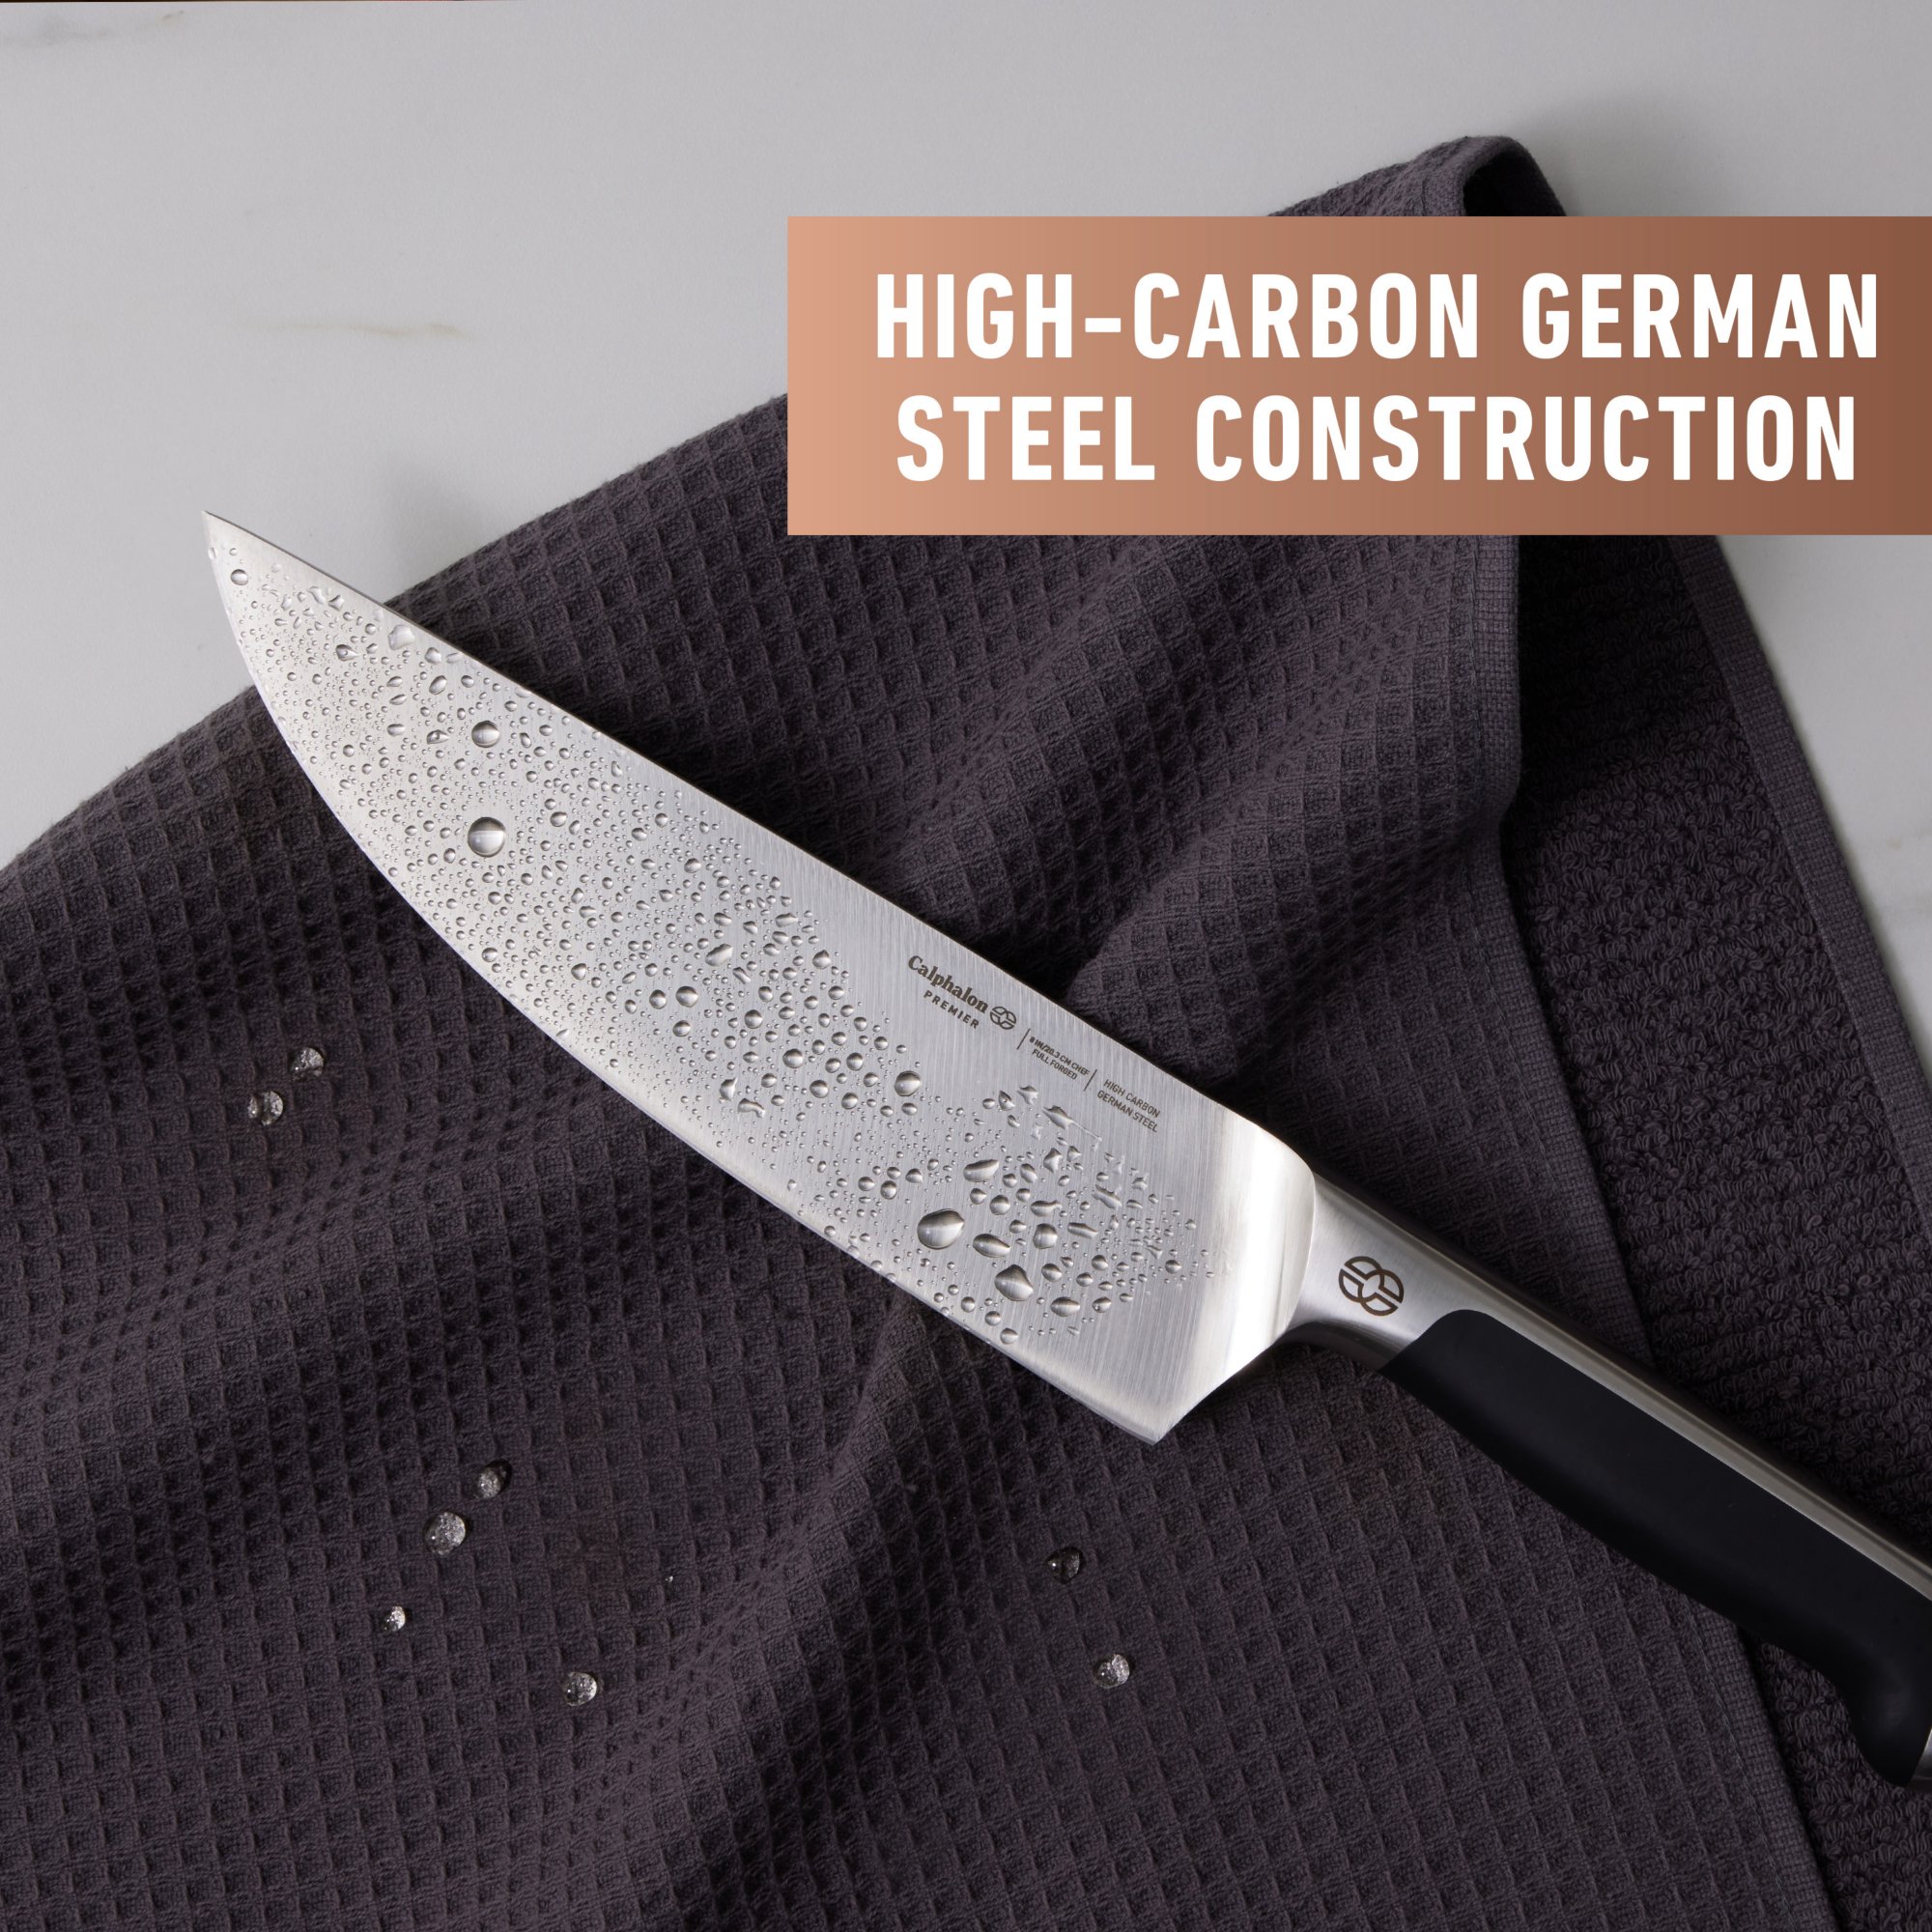 Calphalon Contemporary SharpIN Review: A High-End Knife Set